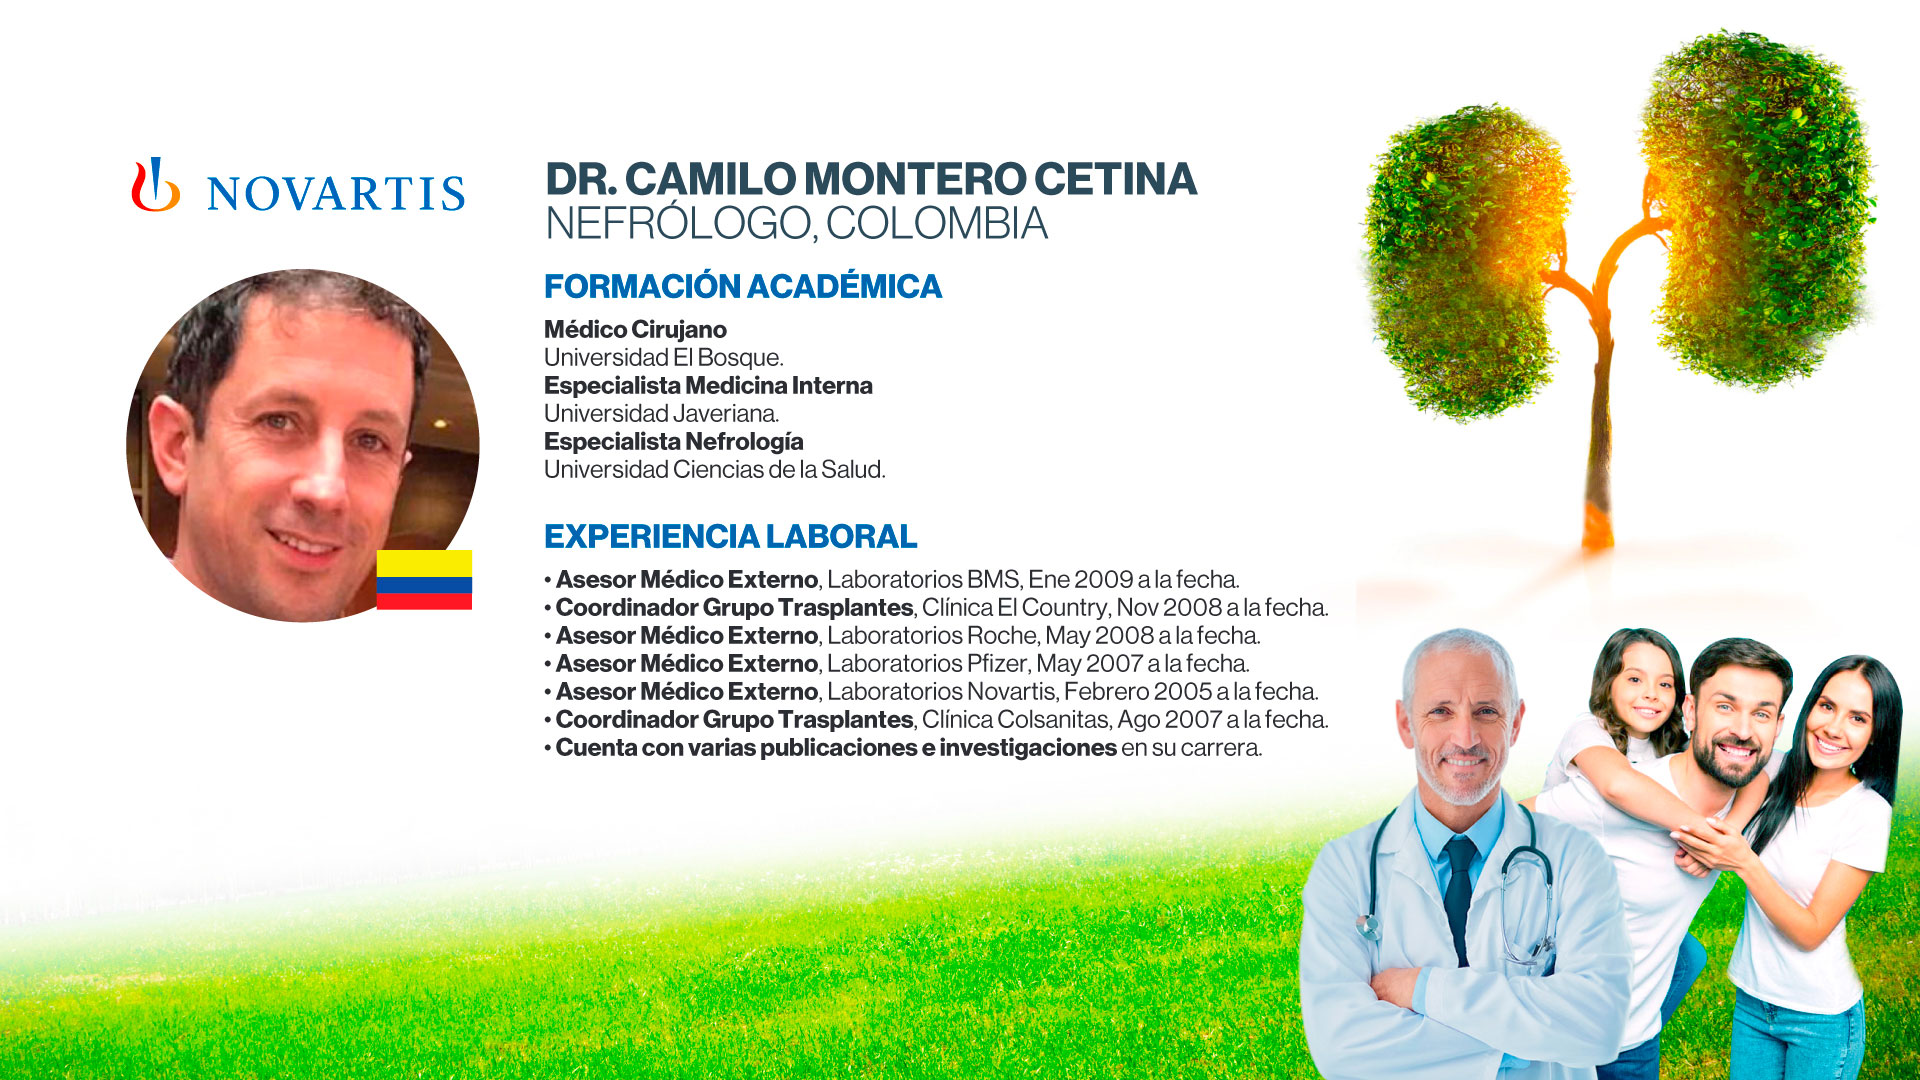 Dr. Camilo Montero Cetina